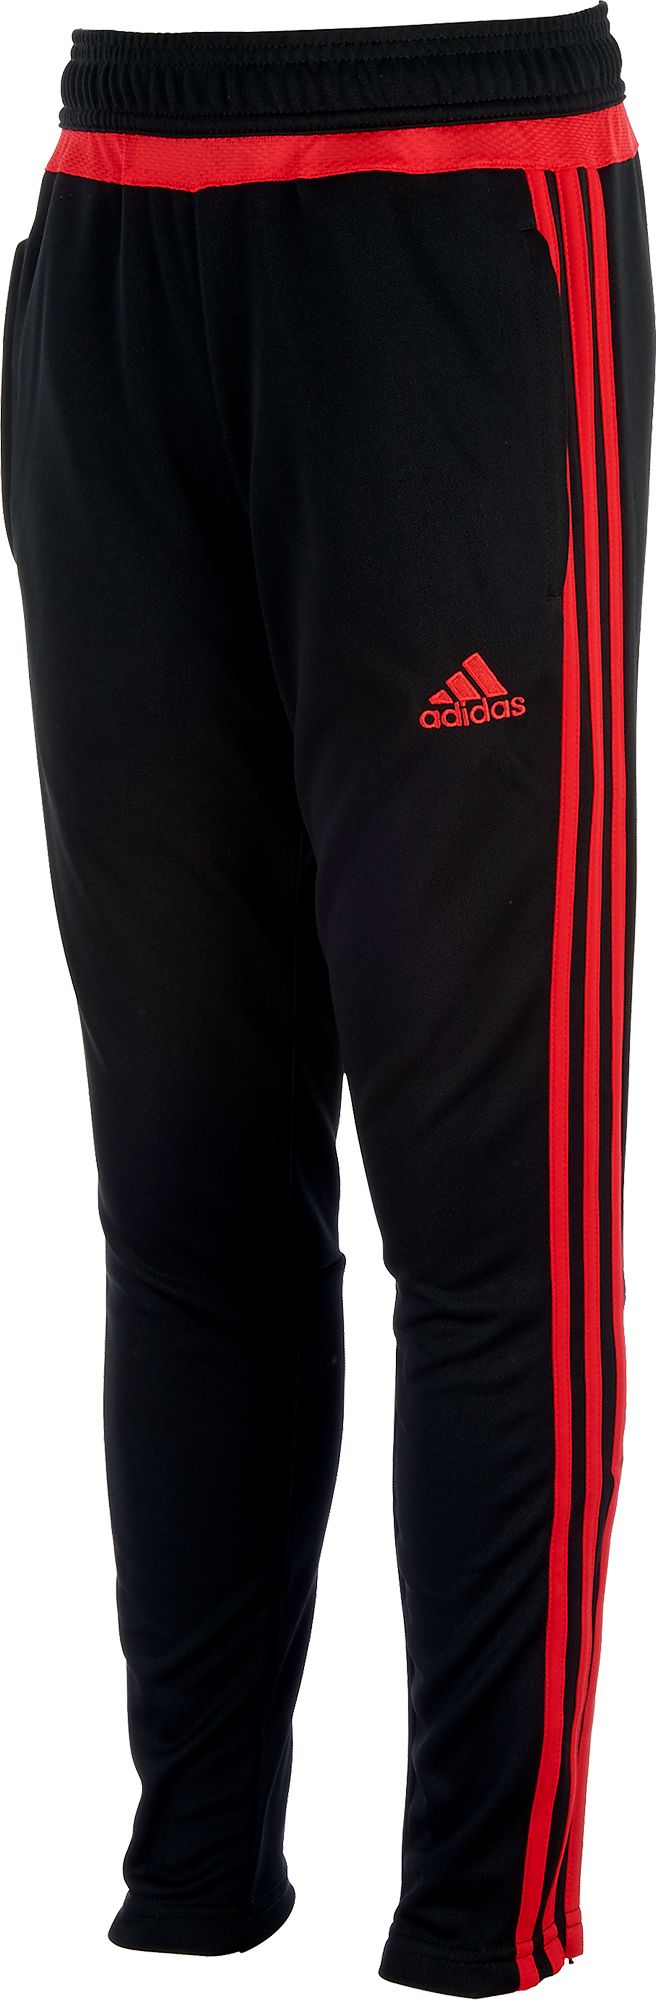 black adidas joggers red stripes